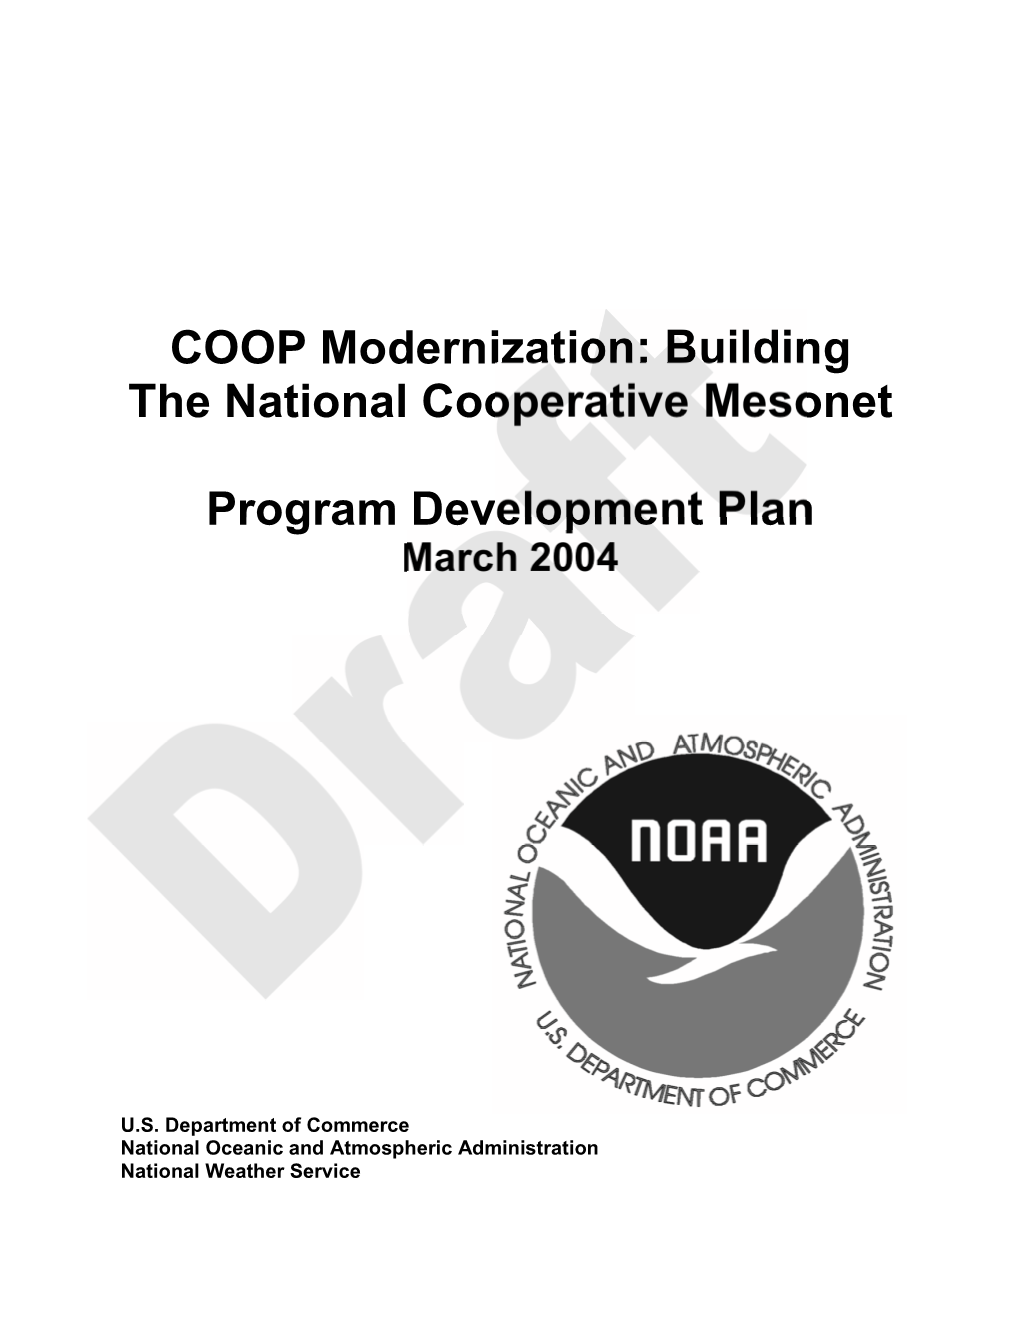 COOP Modernization: Building the National Cooperative Mesonet